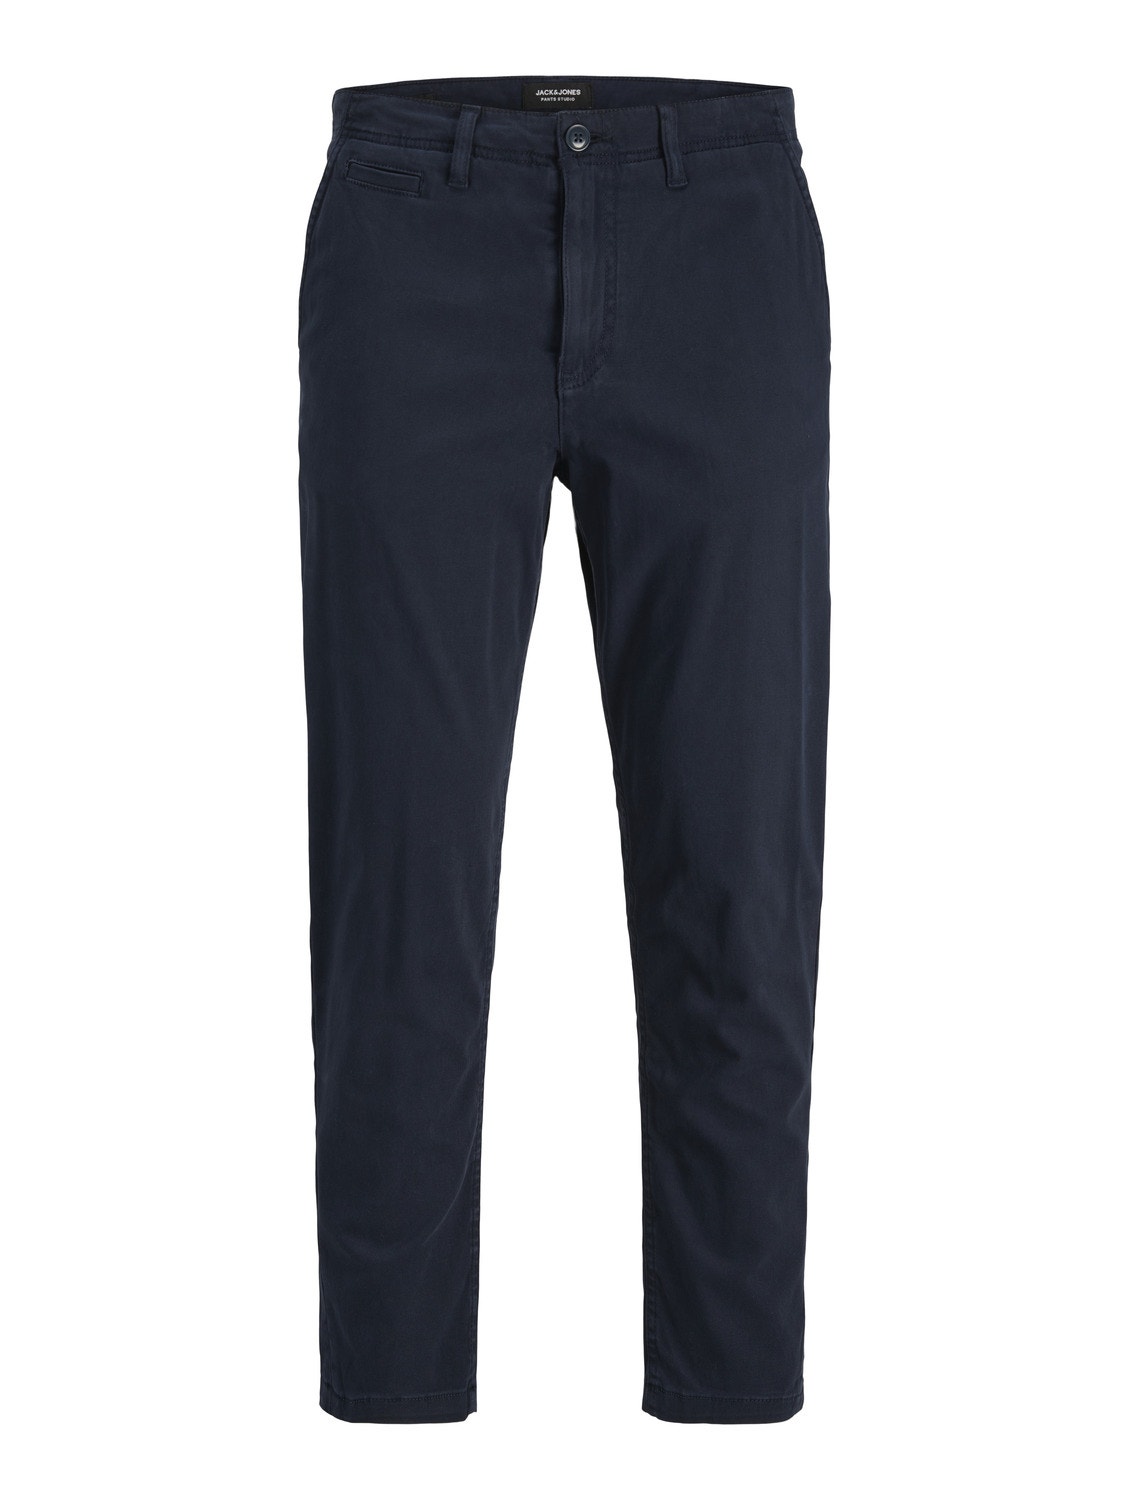 Jack & Jones Tapered Fit Chino trousers -Navy Blazer - 12242188